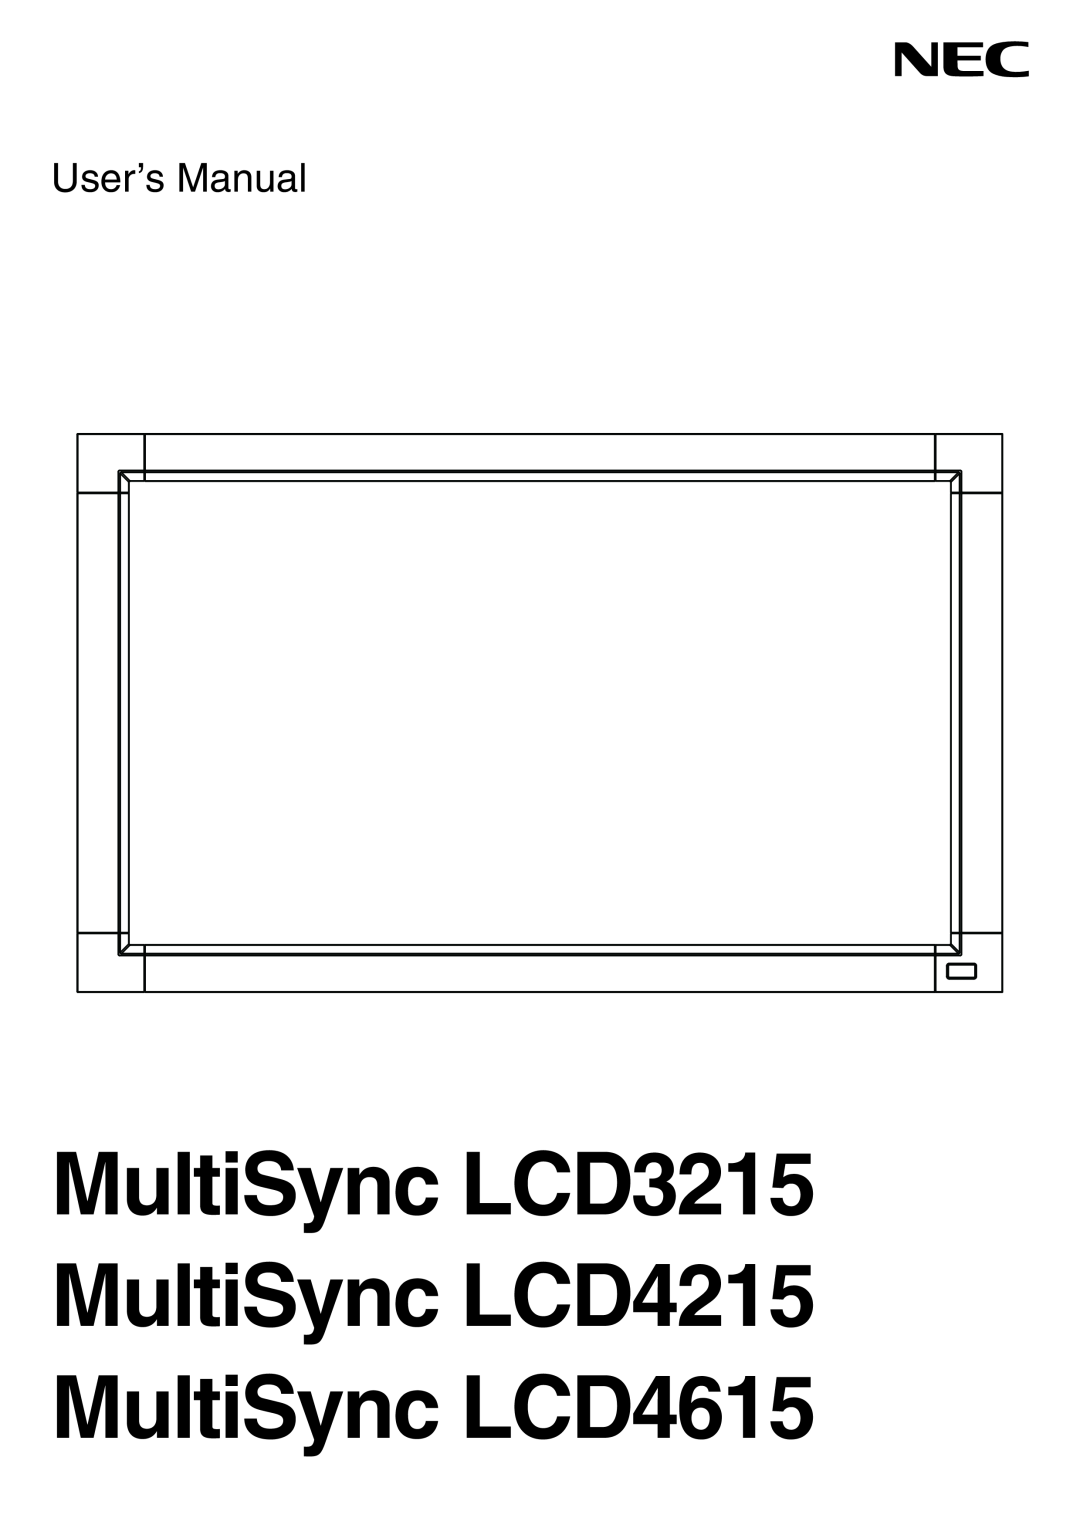 NEC user manual MultiSync LCD3215 MultiSync LCD4215 MultiSync LCD4615, UserÕs Manual 